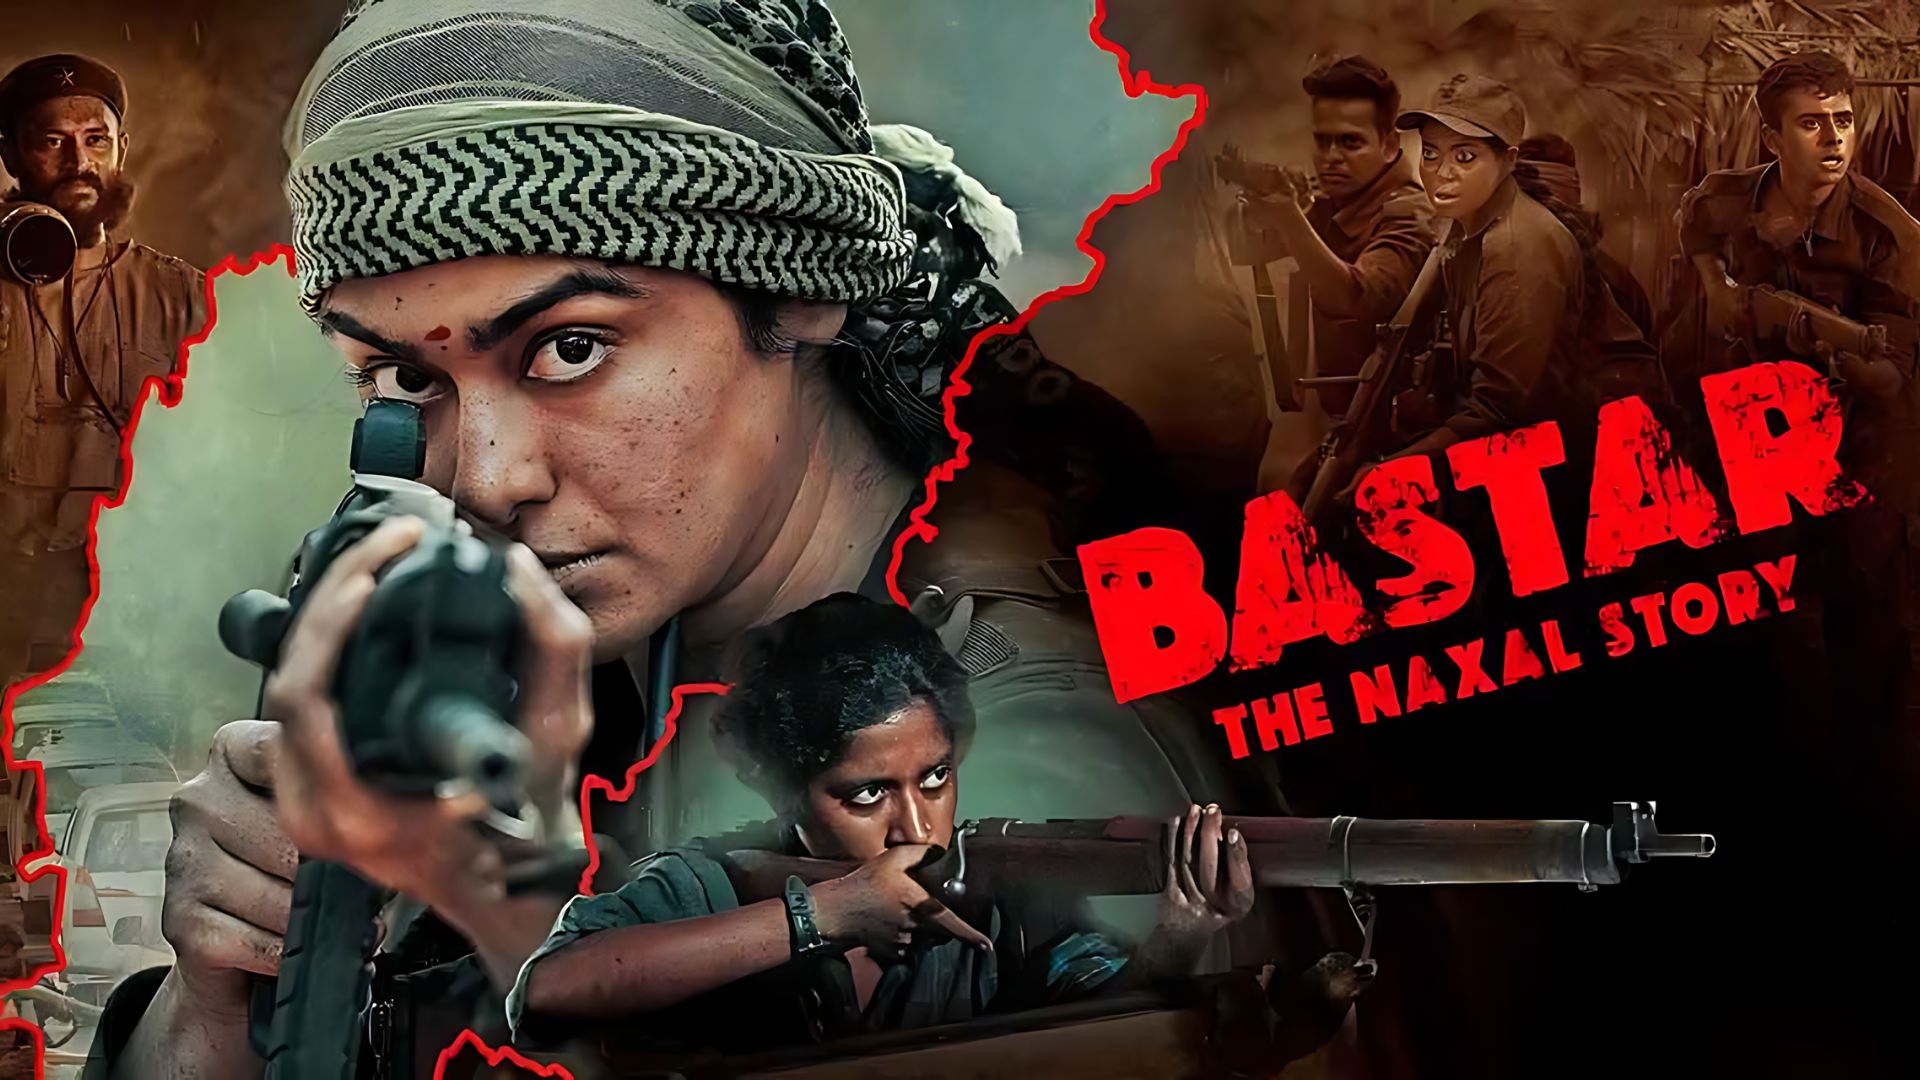 Bastar: The Naxal Story’ Begins Its Digital Journey on ZEE5, Promising a Riveting Narrative